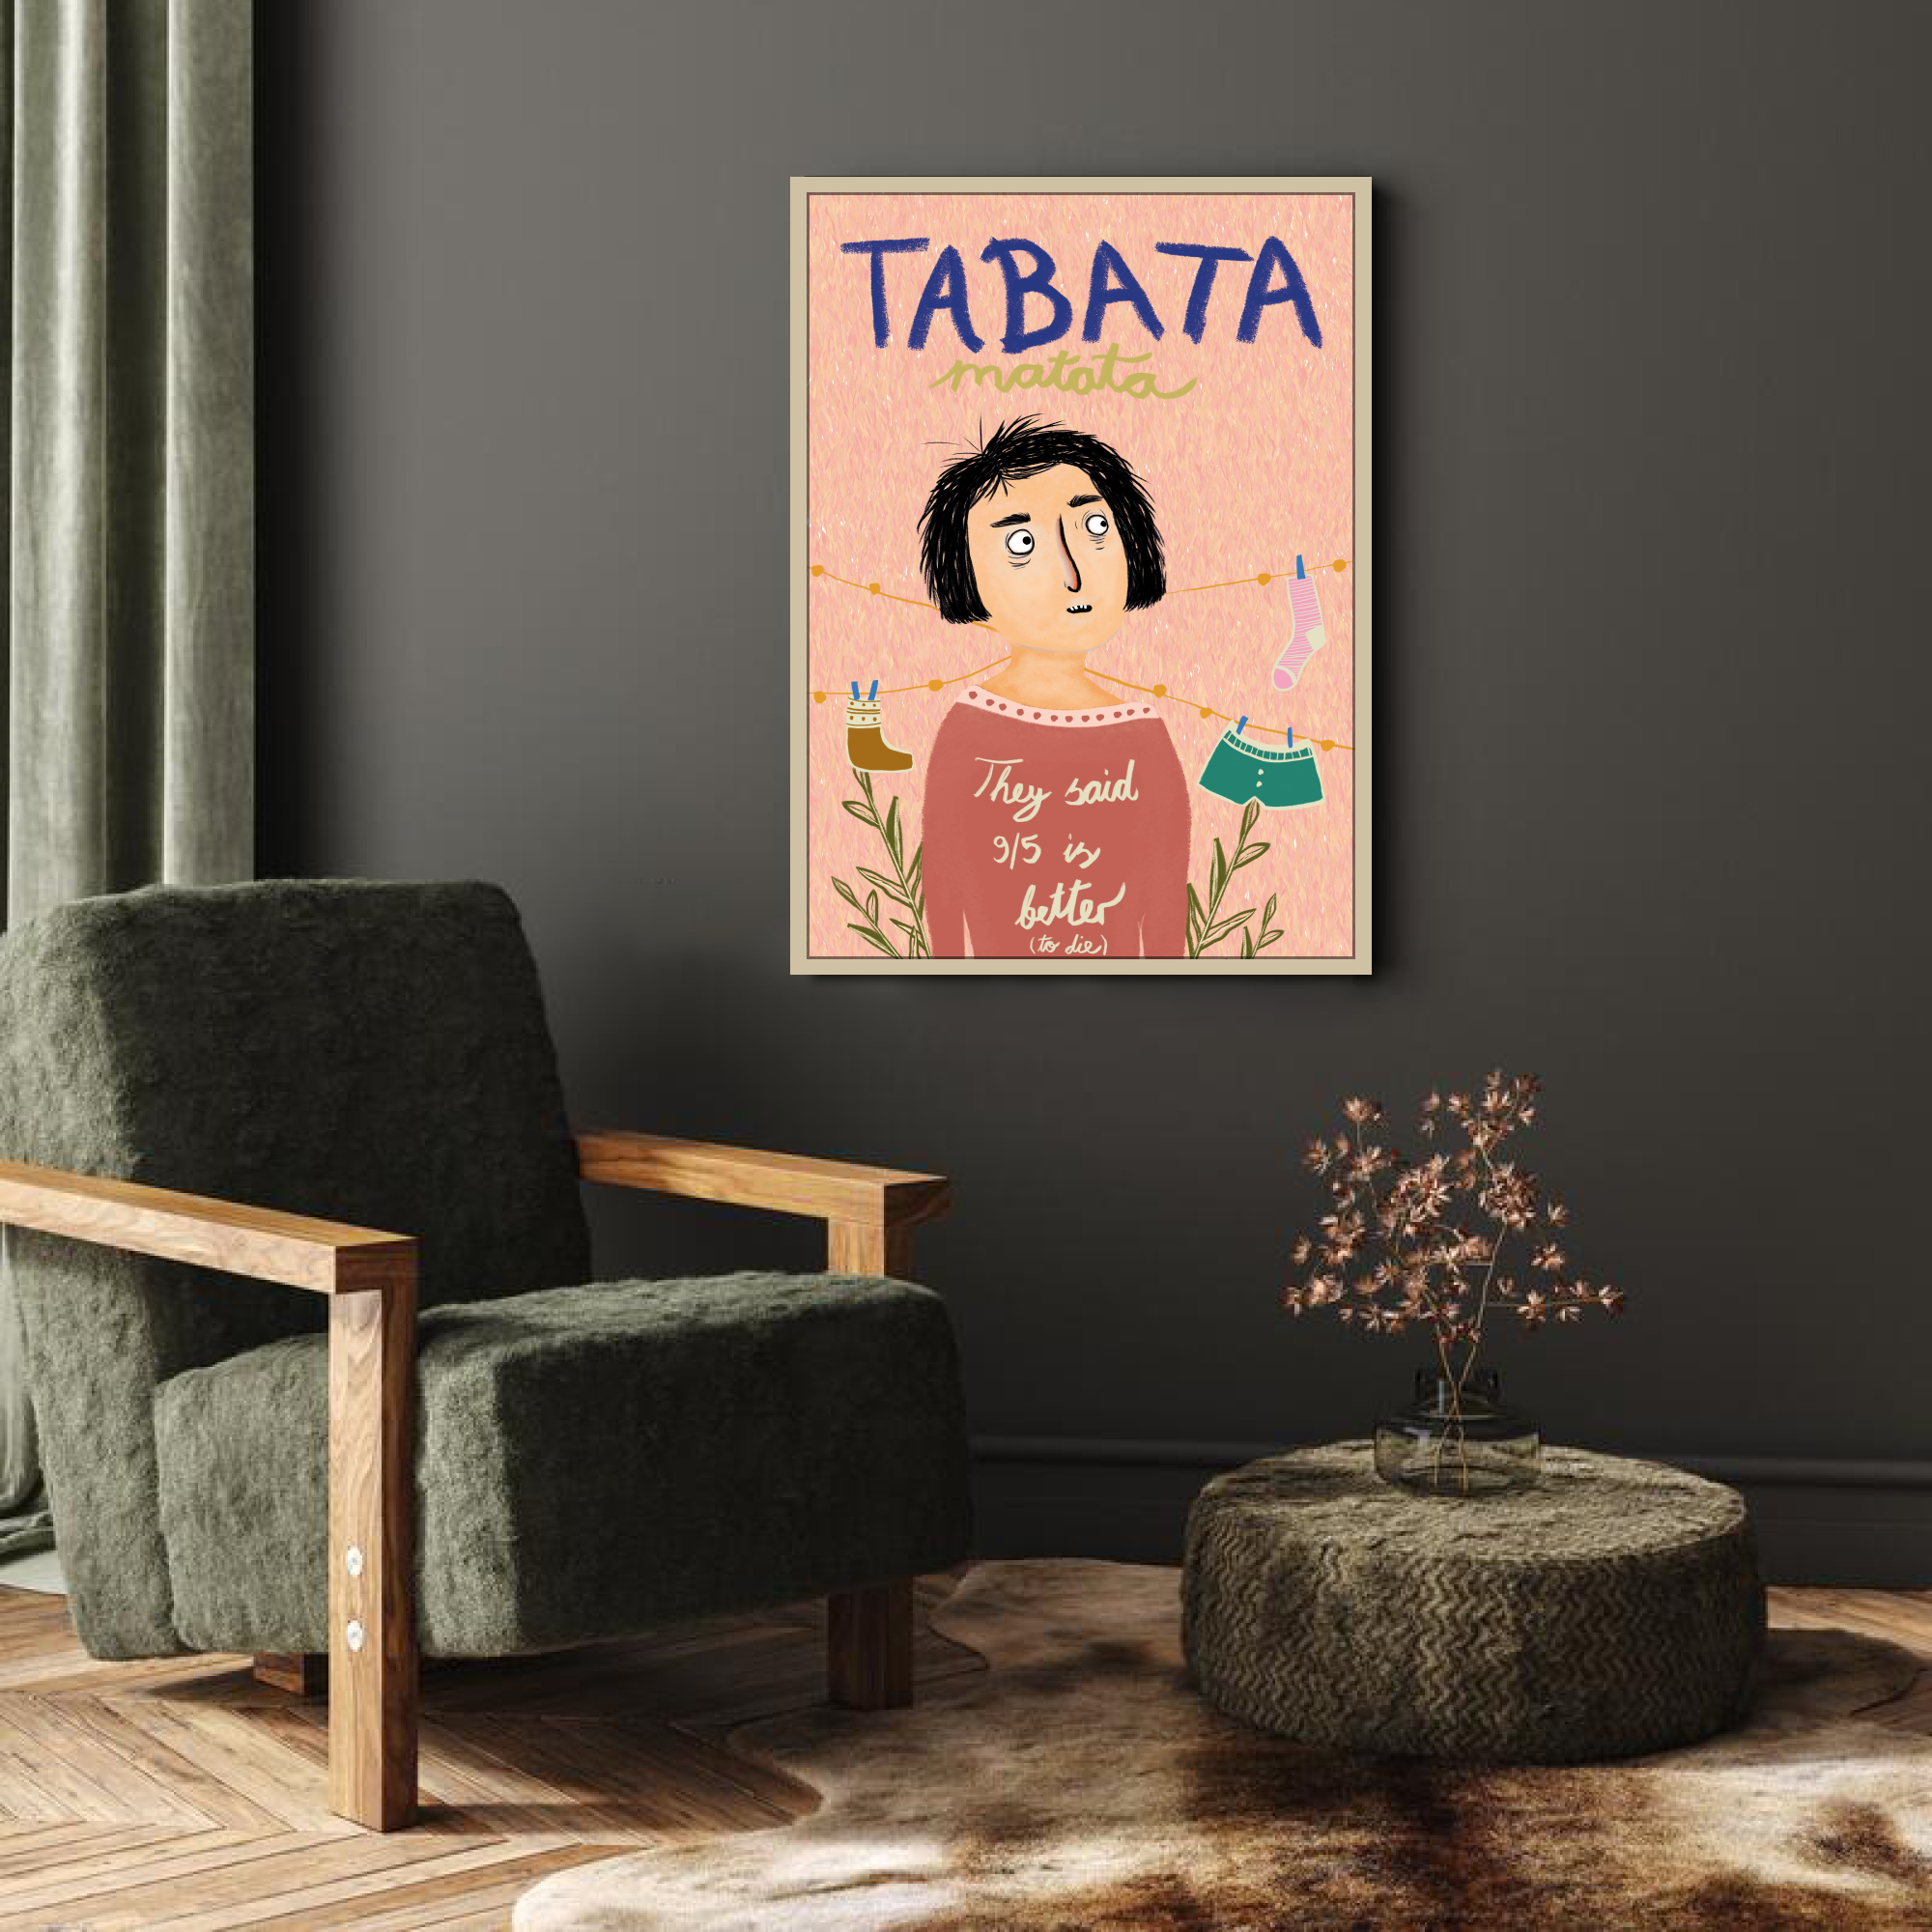 Poster: "Tabata Matata"